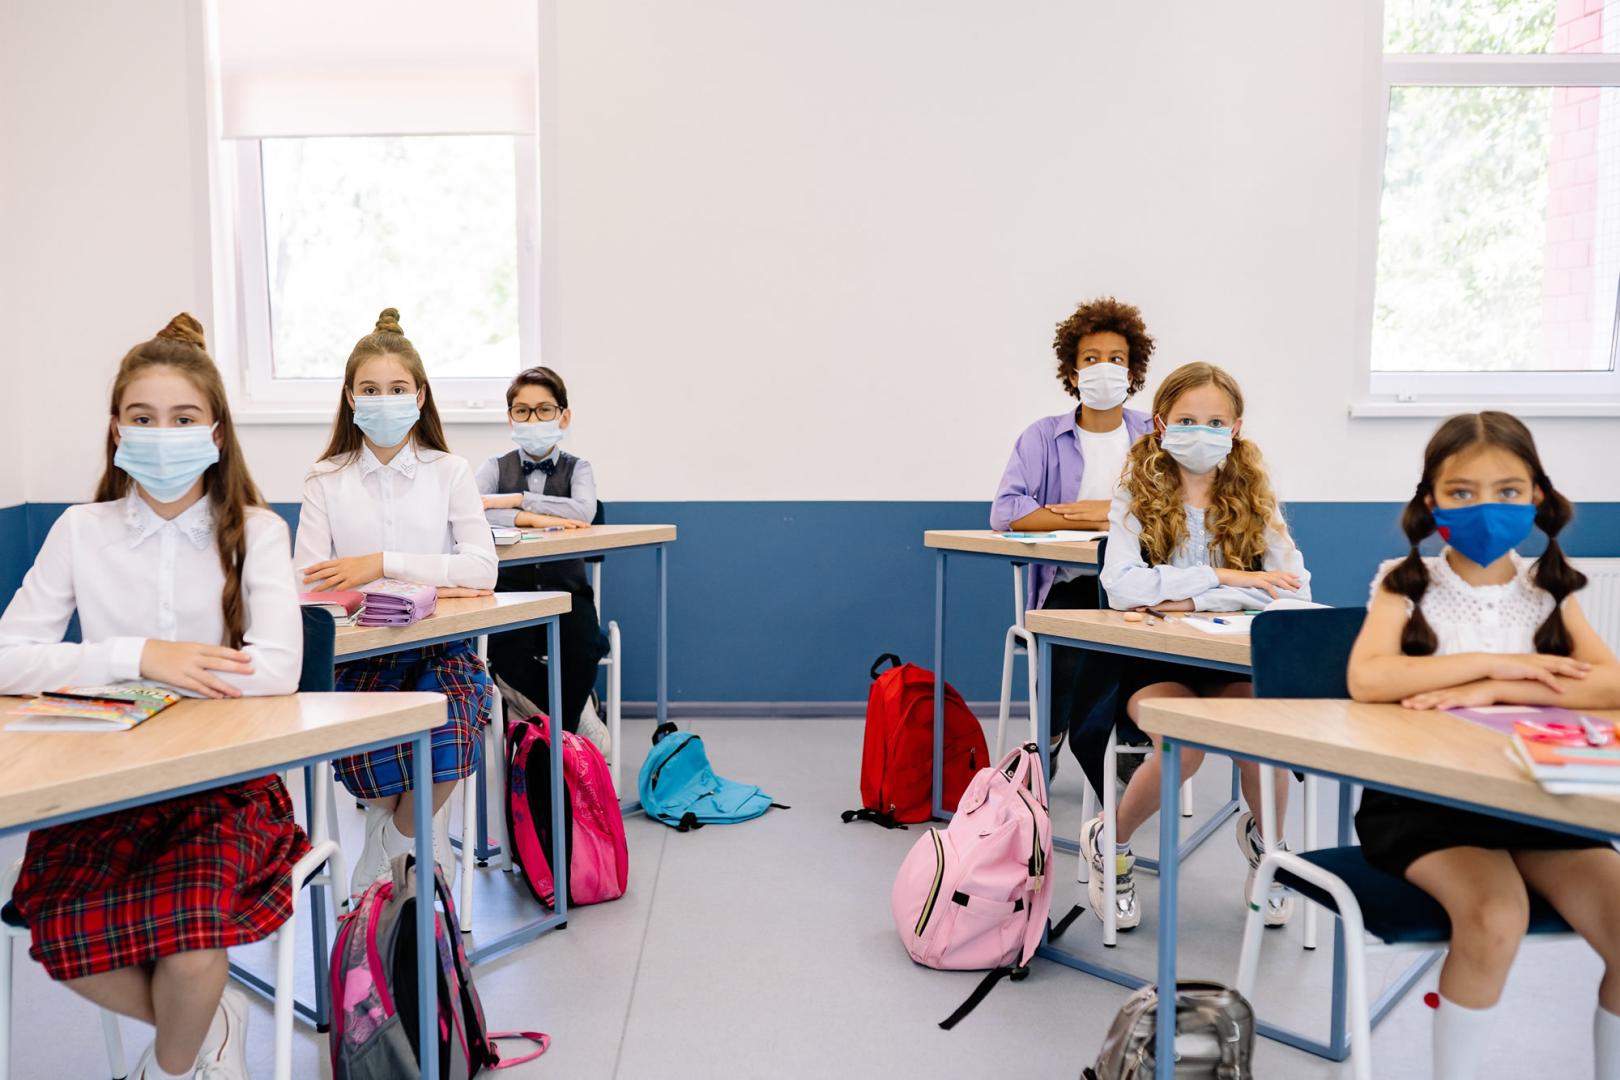 Children in classrooms wearing masks